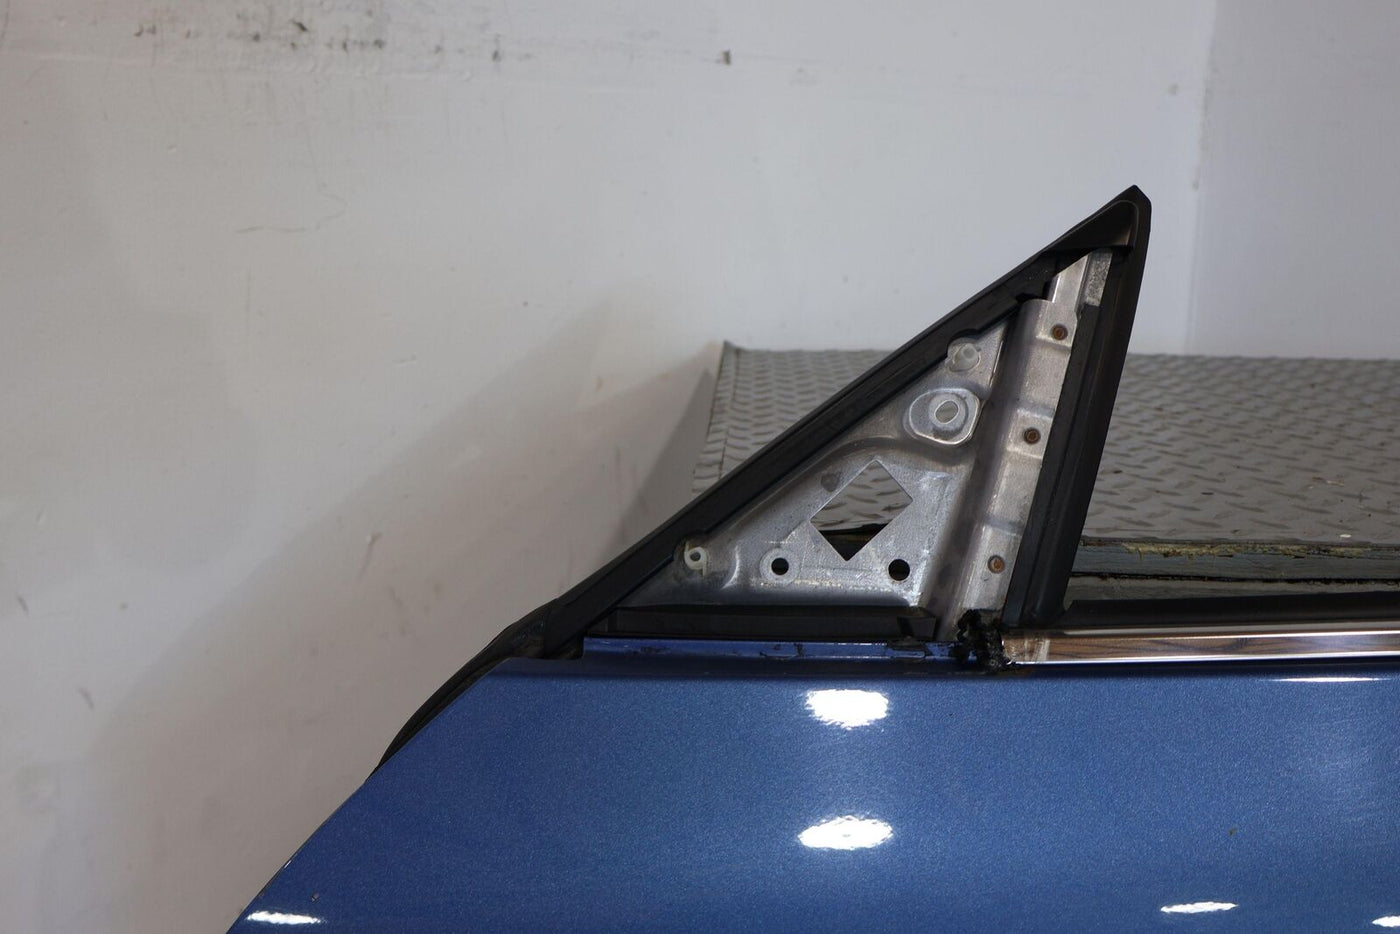 09-13 Infiniti G37 Convertible Left LH Driver Door W/ Glass (Blue Pearl RAW)